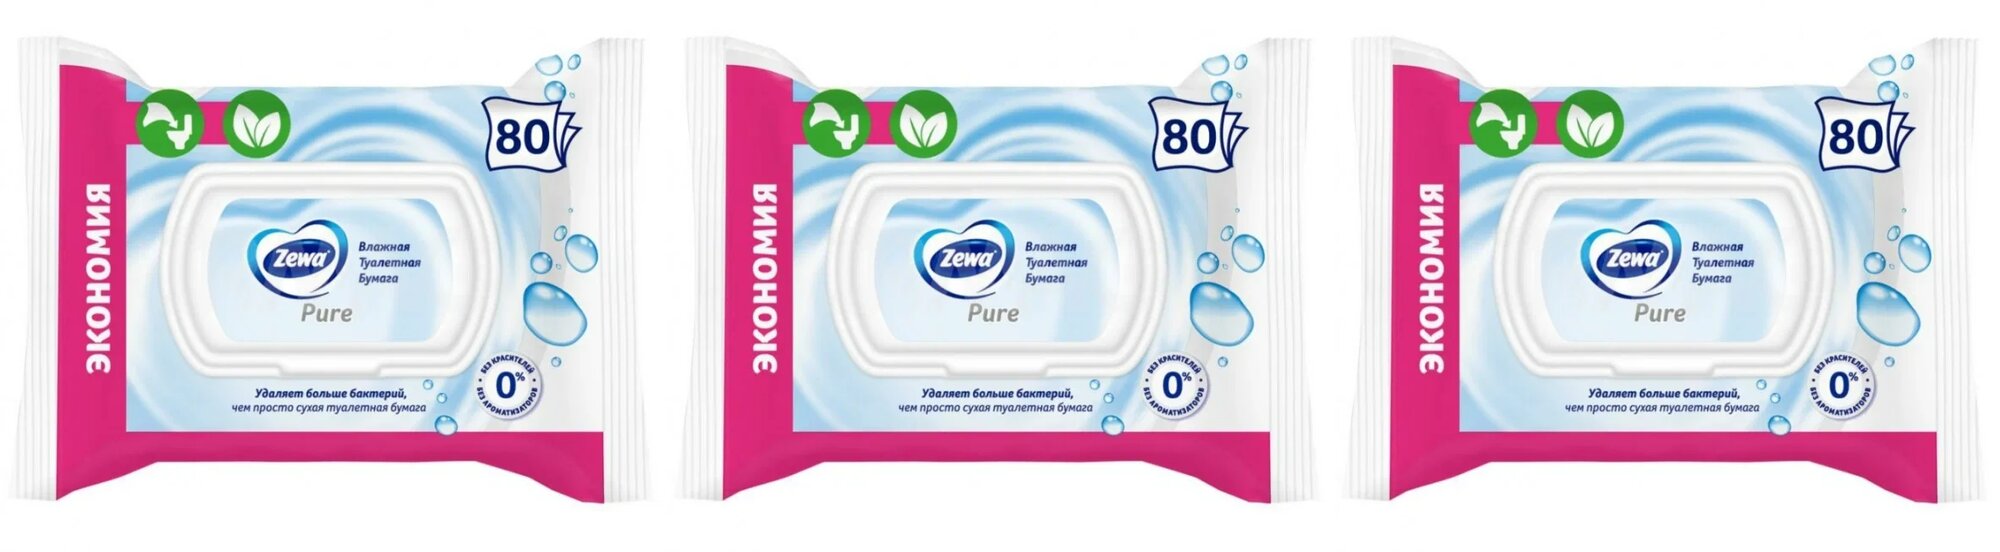 Влажная туалетная бумага Zewa Pure, 80 шт, 3 упаковки